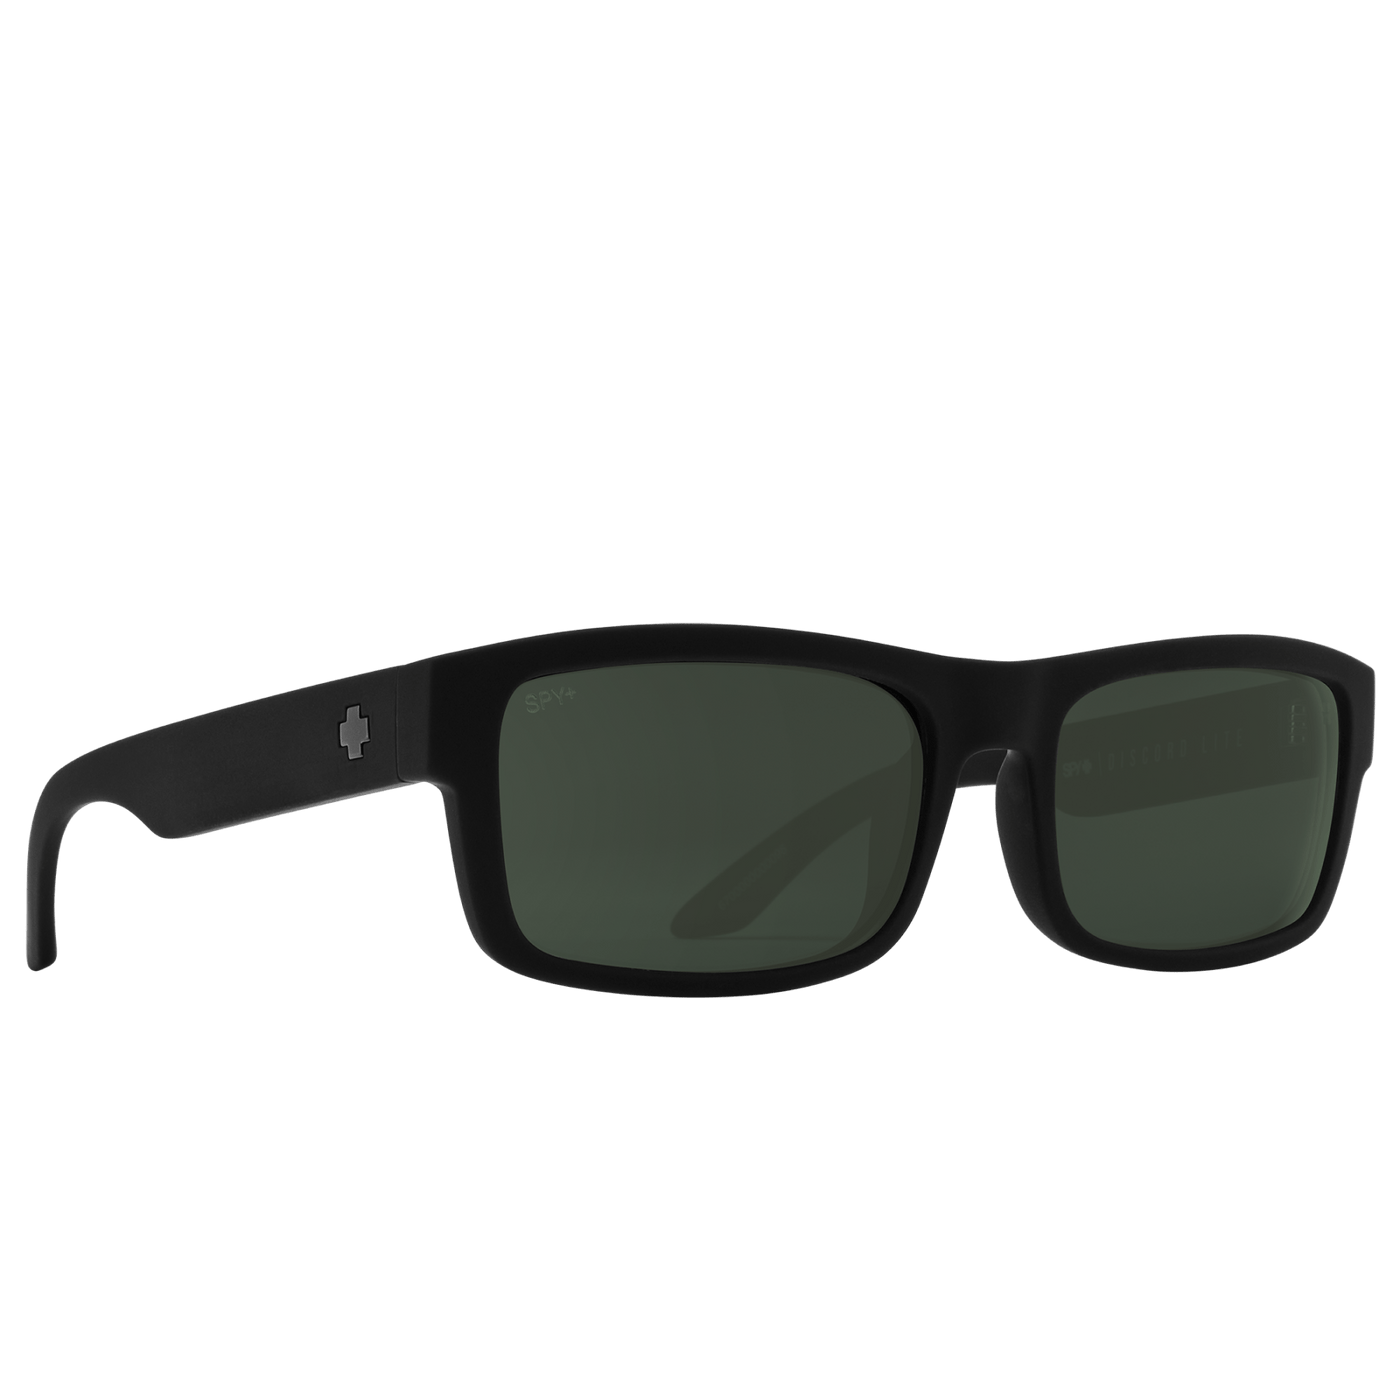 SPY DISCORD LITE Polarized Sunglasses - Soft Matte Black